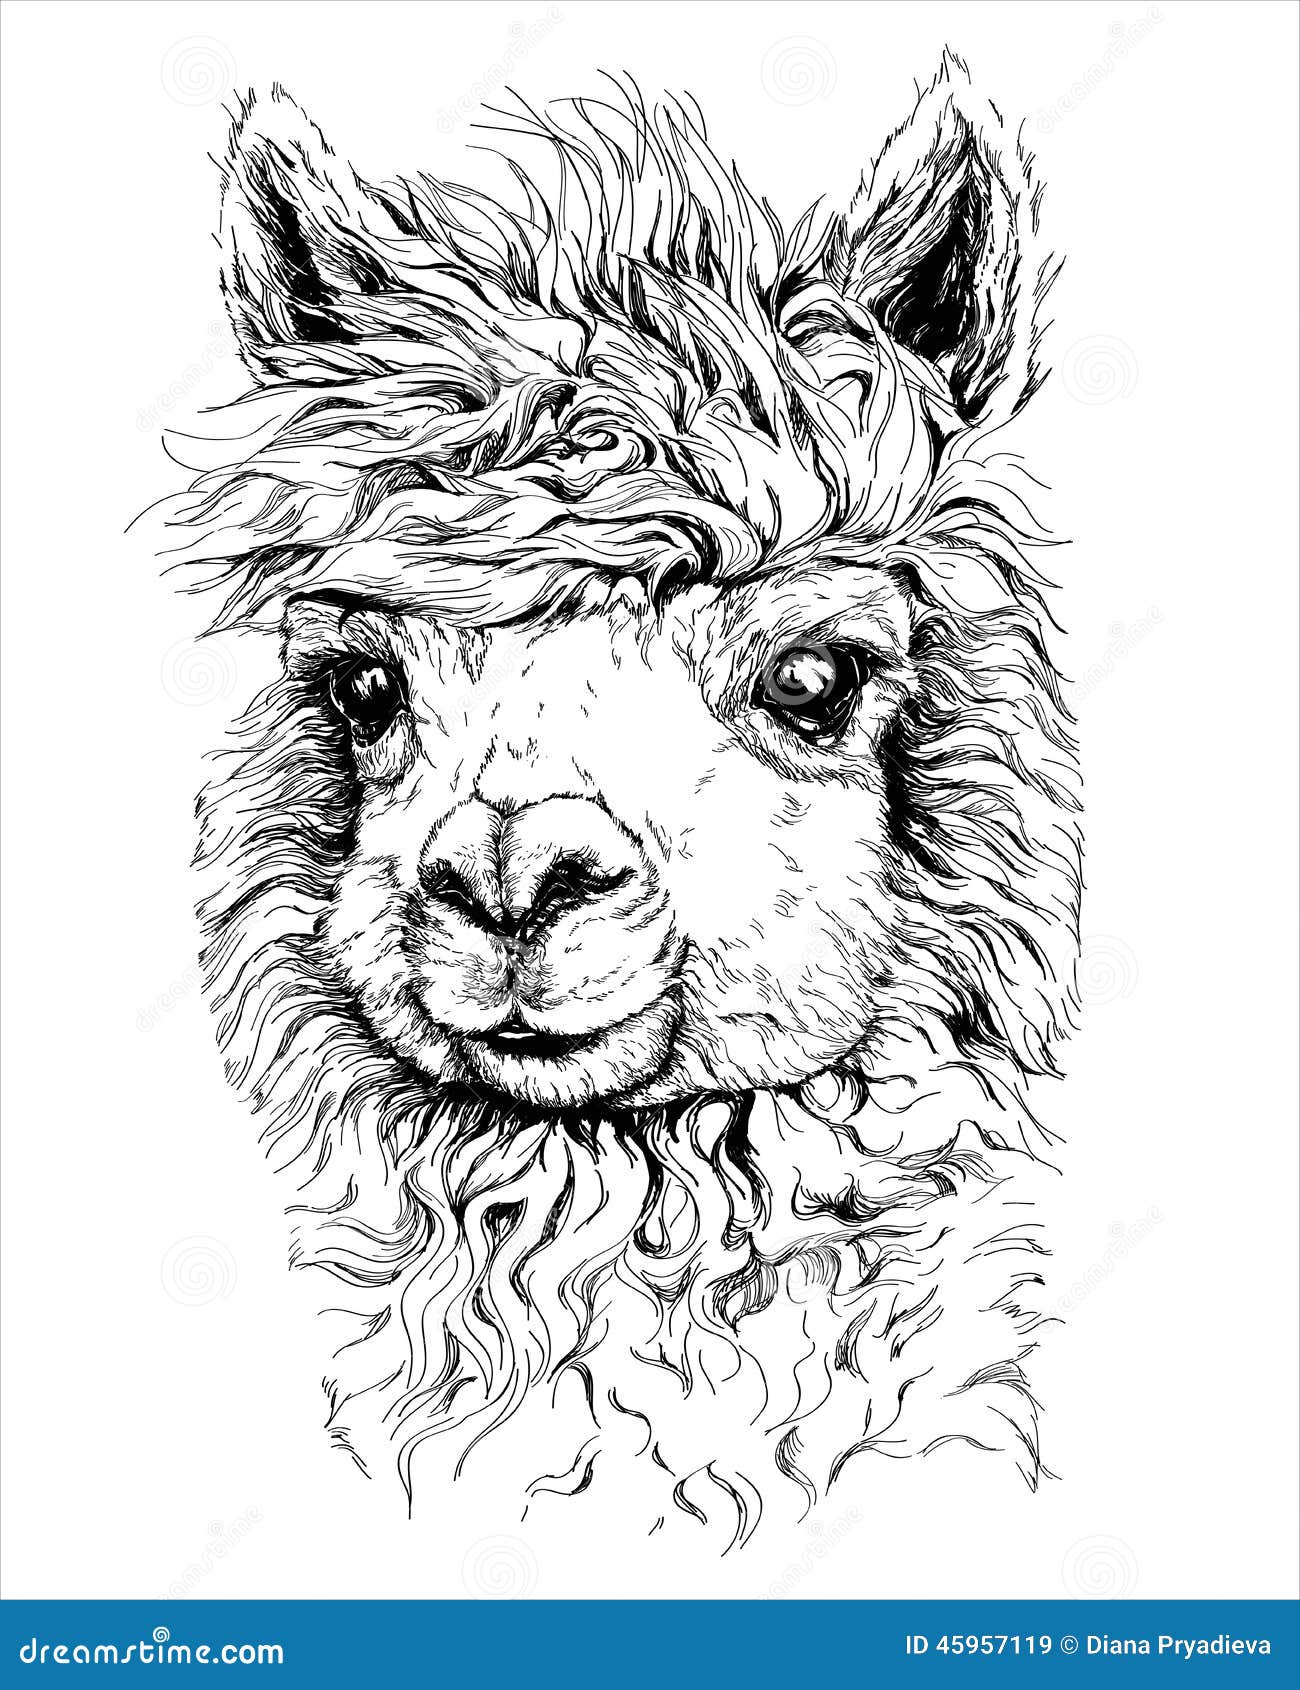 llama tumblr drawings LAMA White Drawing And Of Alpaca, Realistic Sketch Black